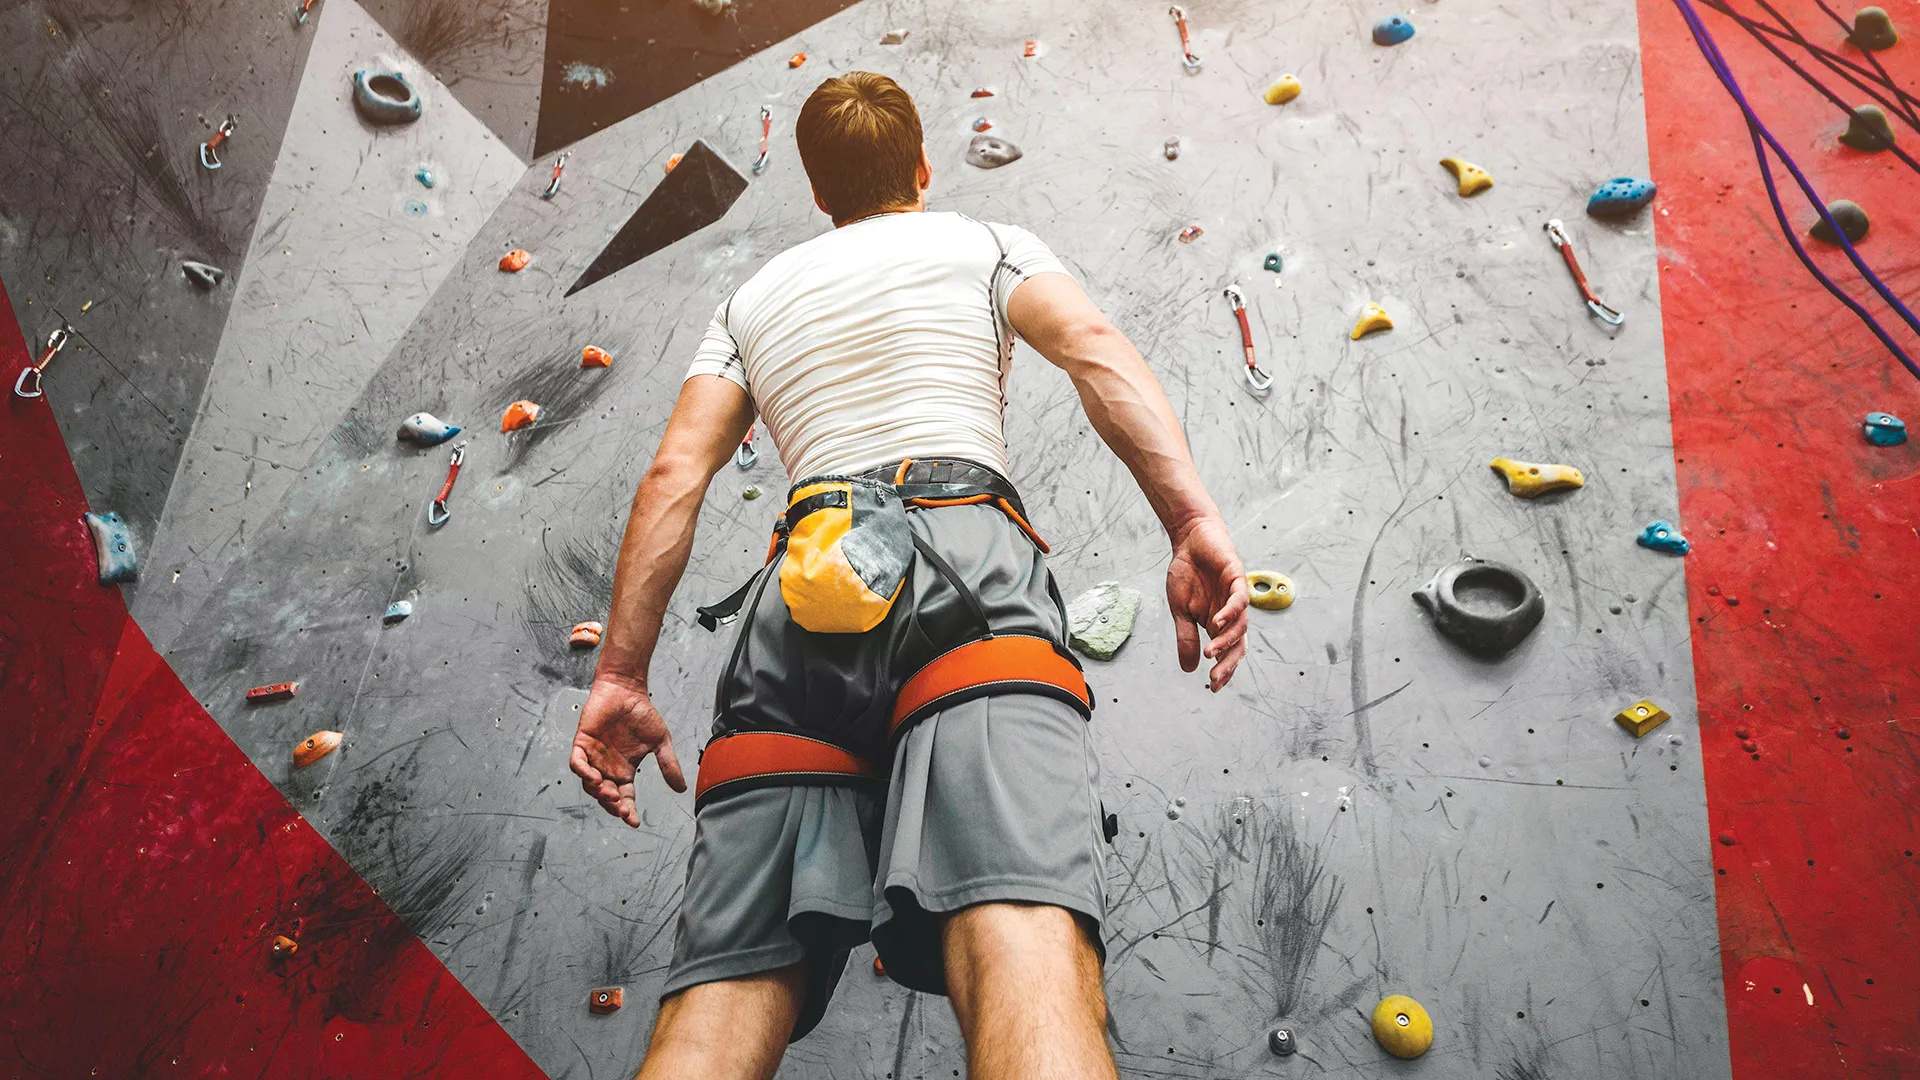 Rock Climbing: Sport Climbing In The Gym In Madrid, Spain Climbing Walls In 2022. 1920x1080 Full HD Wallpaper.